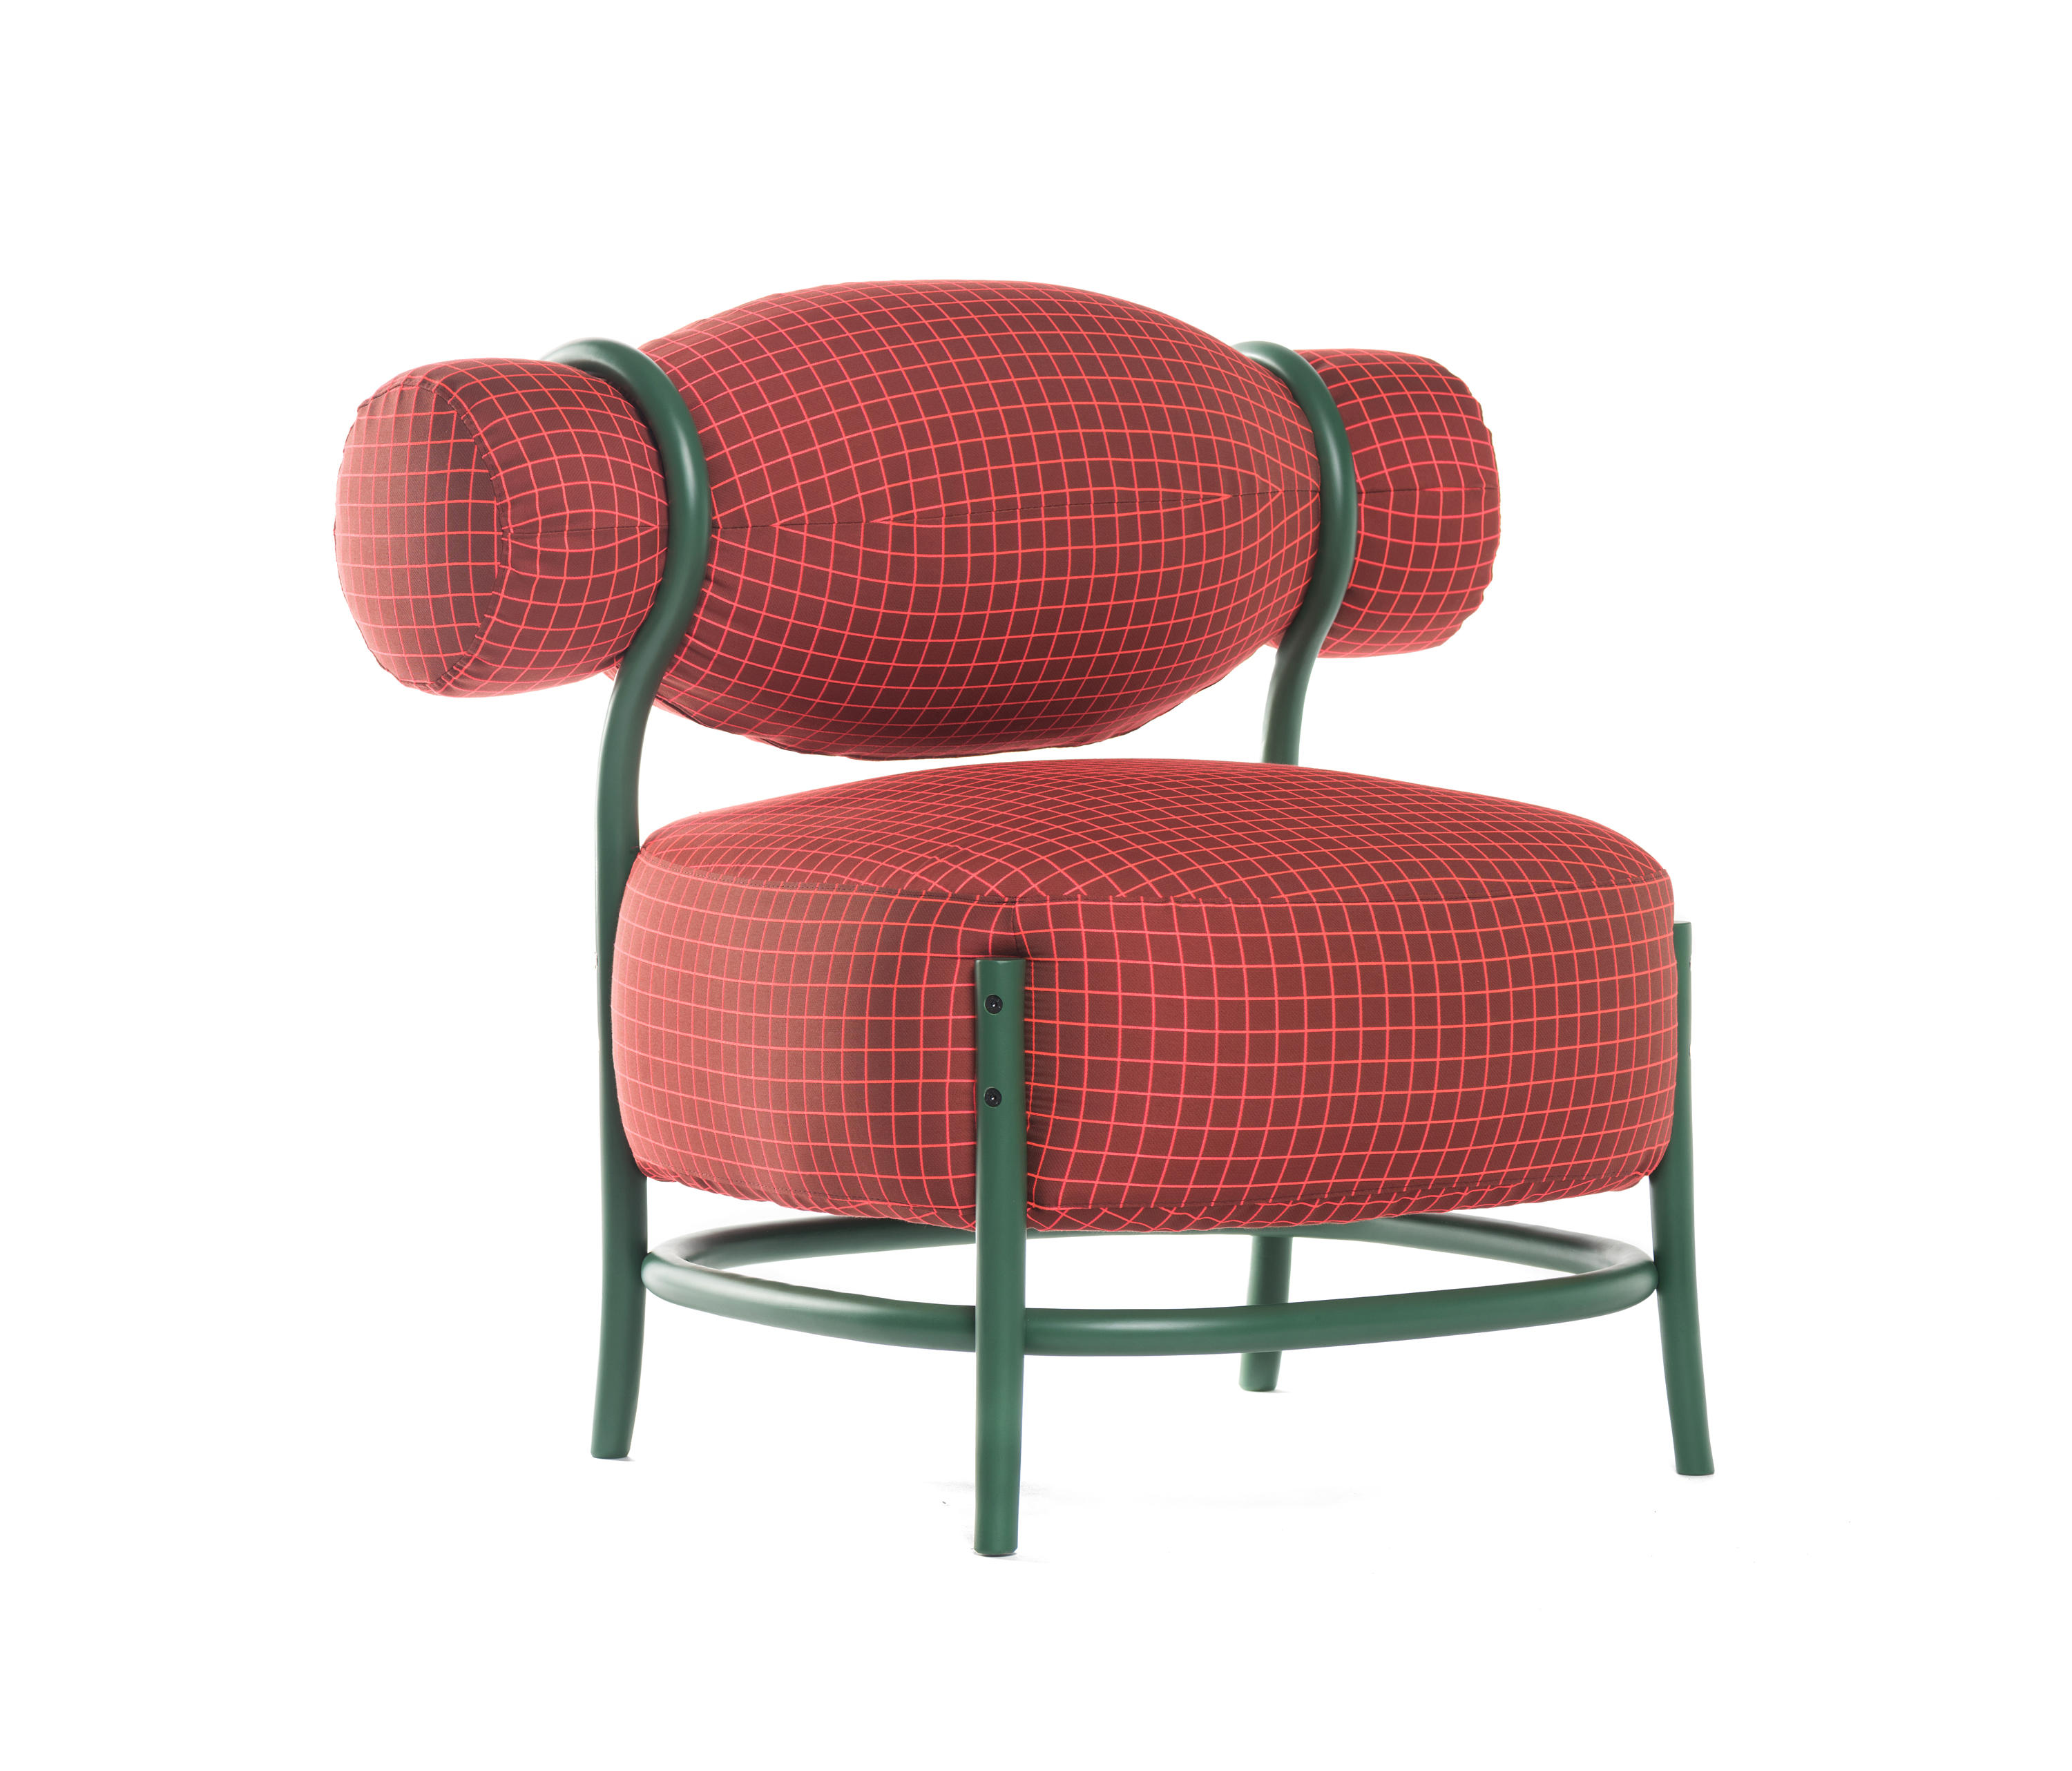 Chignon Chair by LucidiPevere for WIENER GTV DESIGN